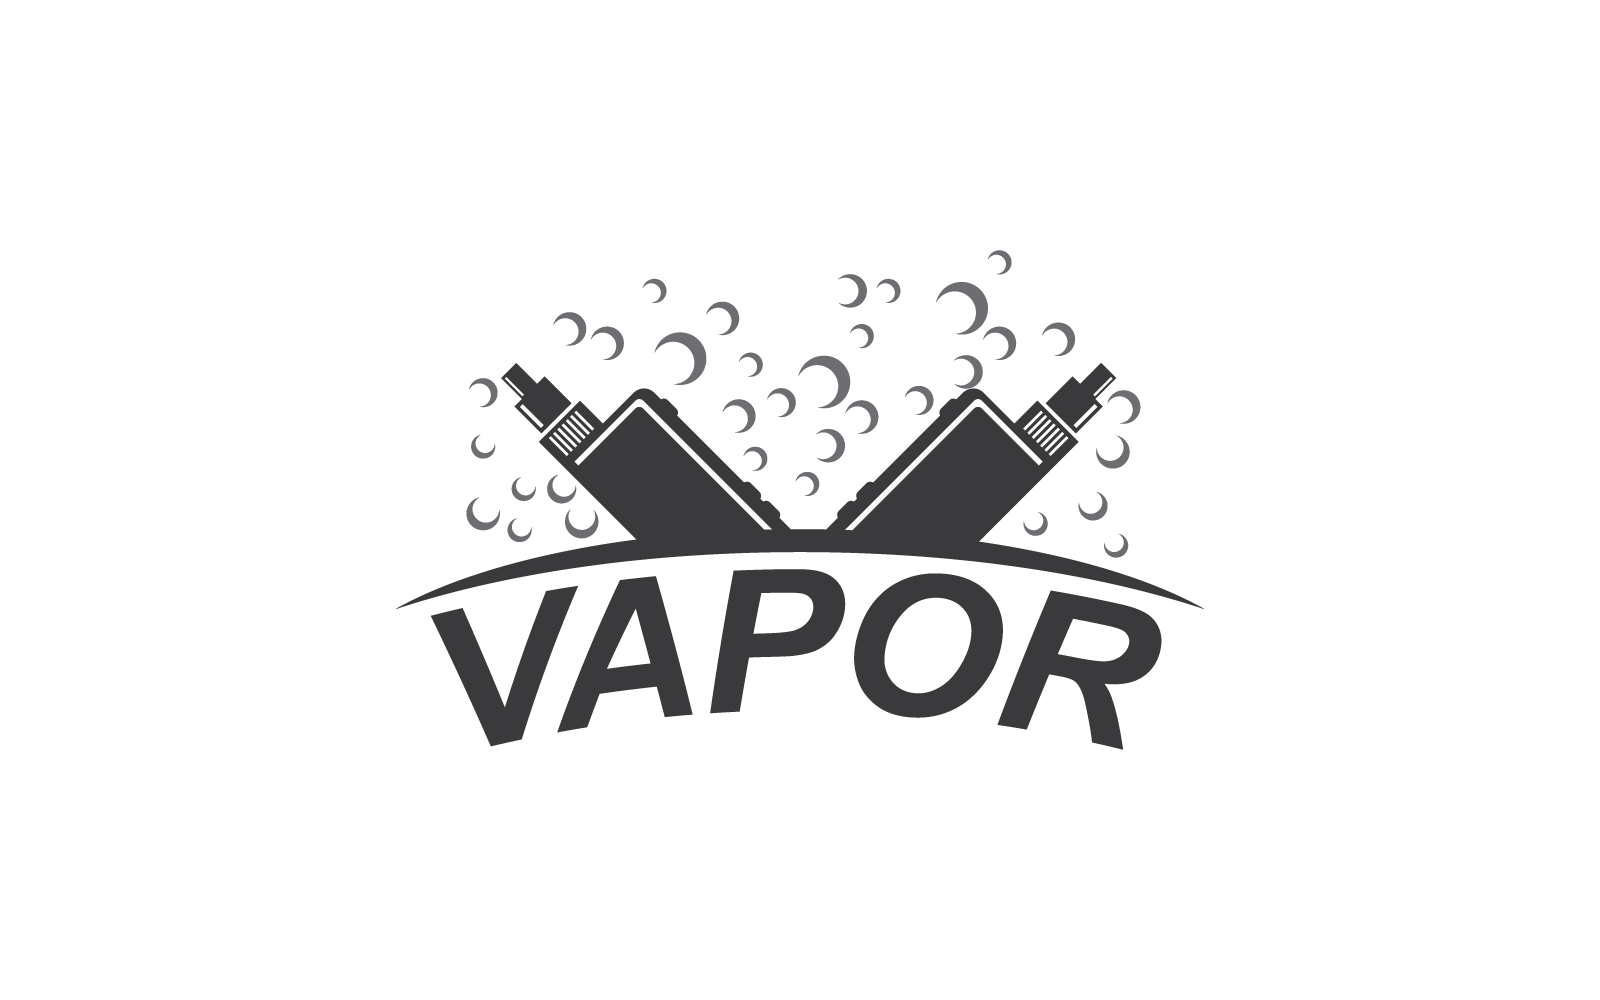 Vapor or vape logo flat design illustration template